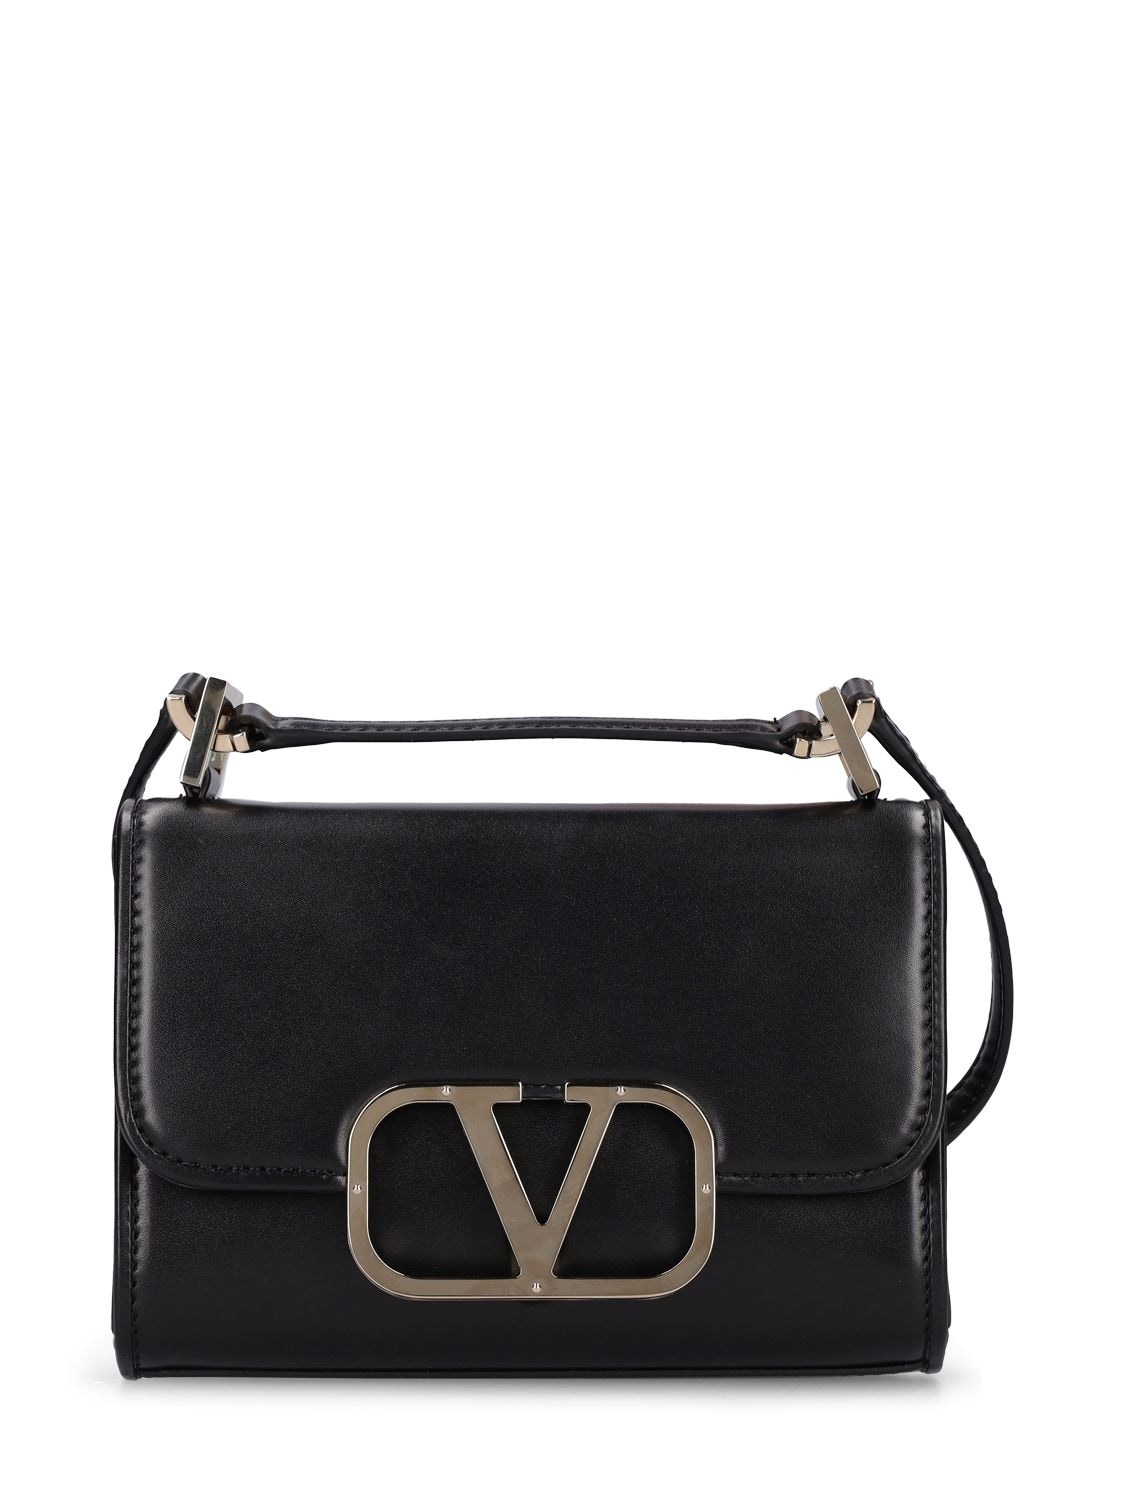 Valentino Garavani Small Letter Mirrored Shoulder Bag